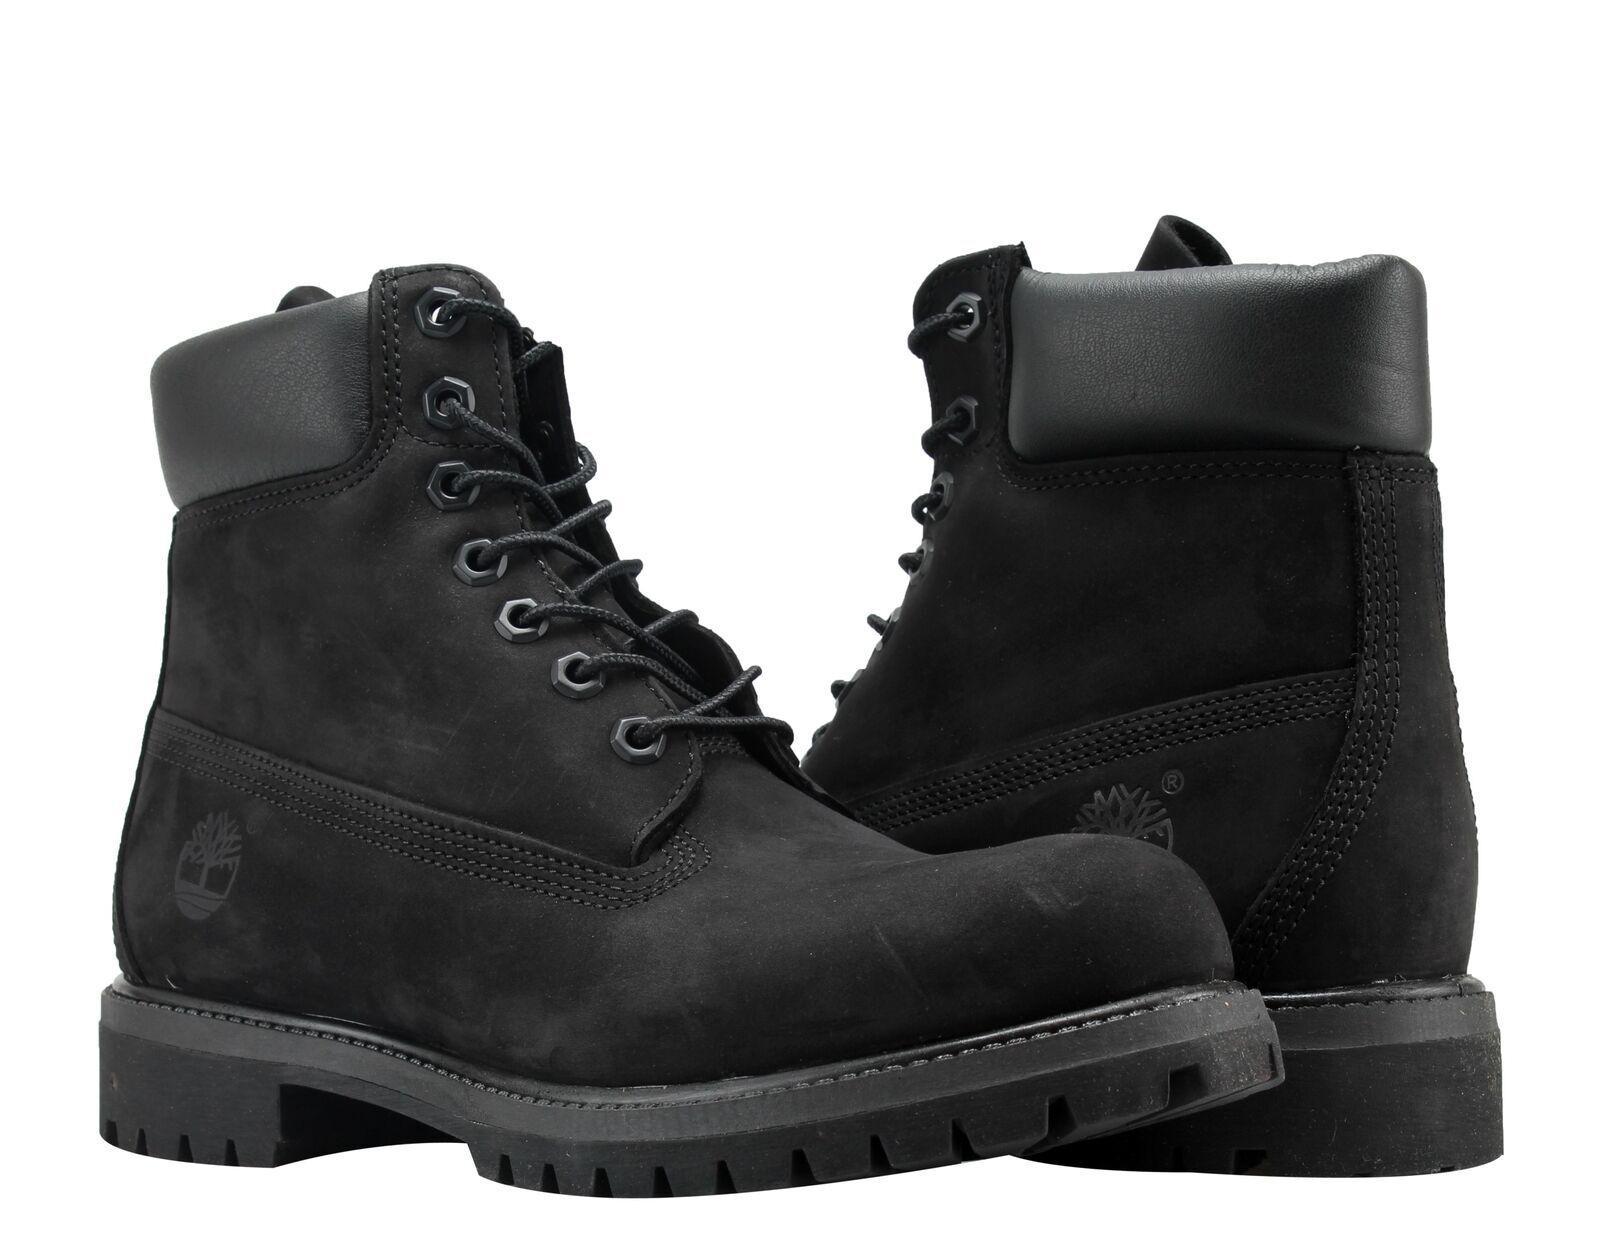 TIMBERLAND Mens 6-Inch Premium Waterproof Boots Original Iconic Shoes - Black Nubuck - US 13